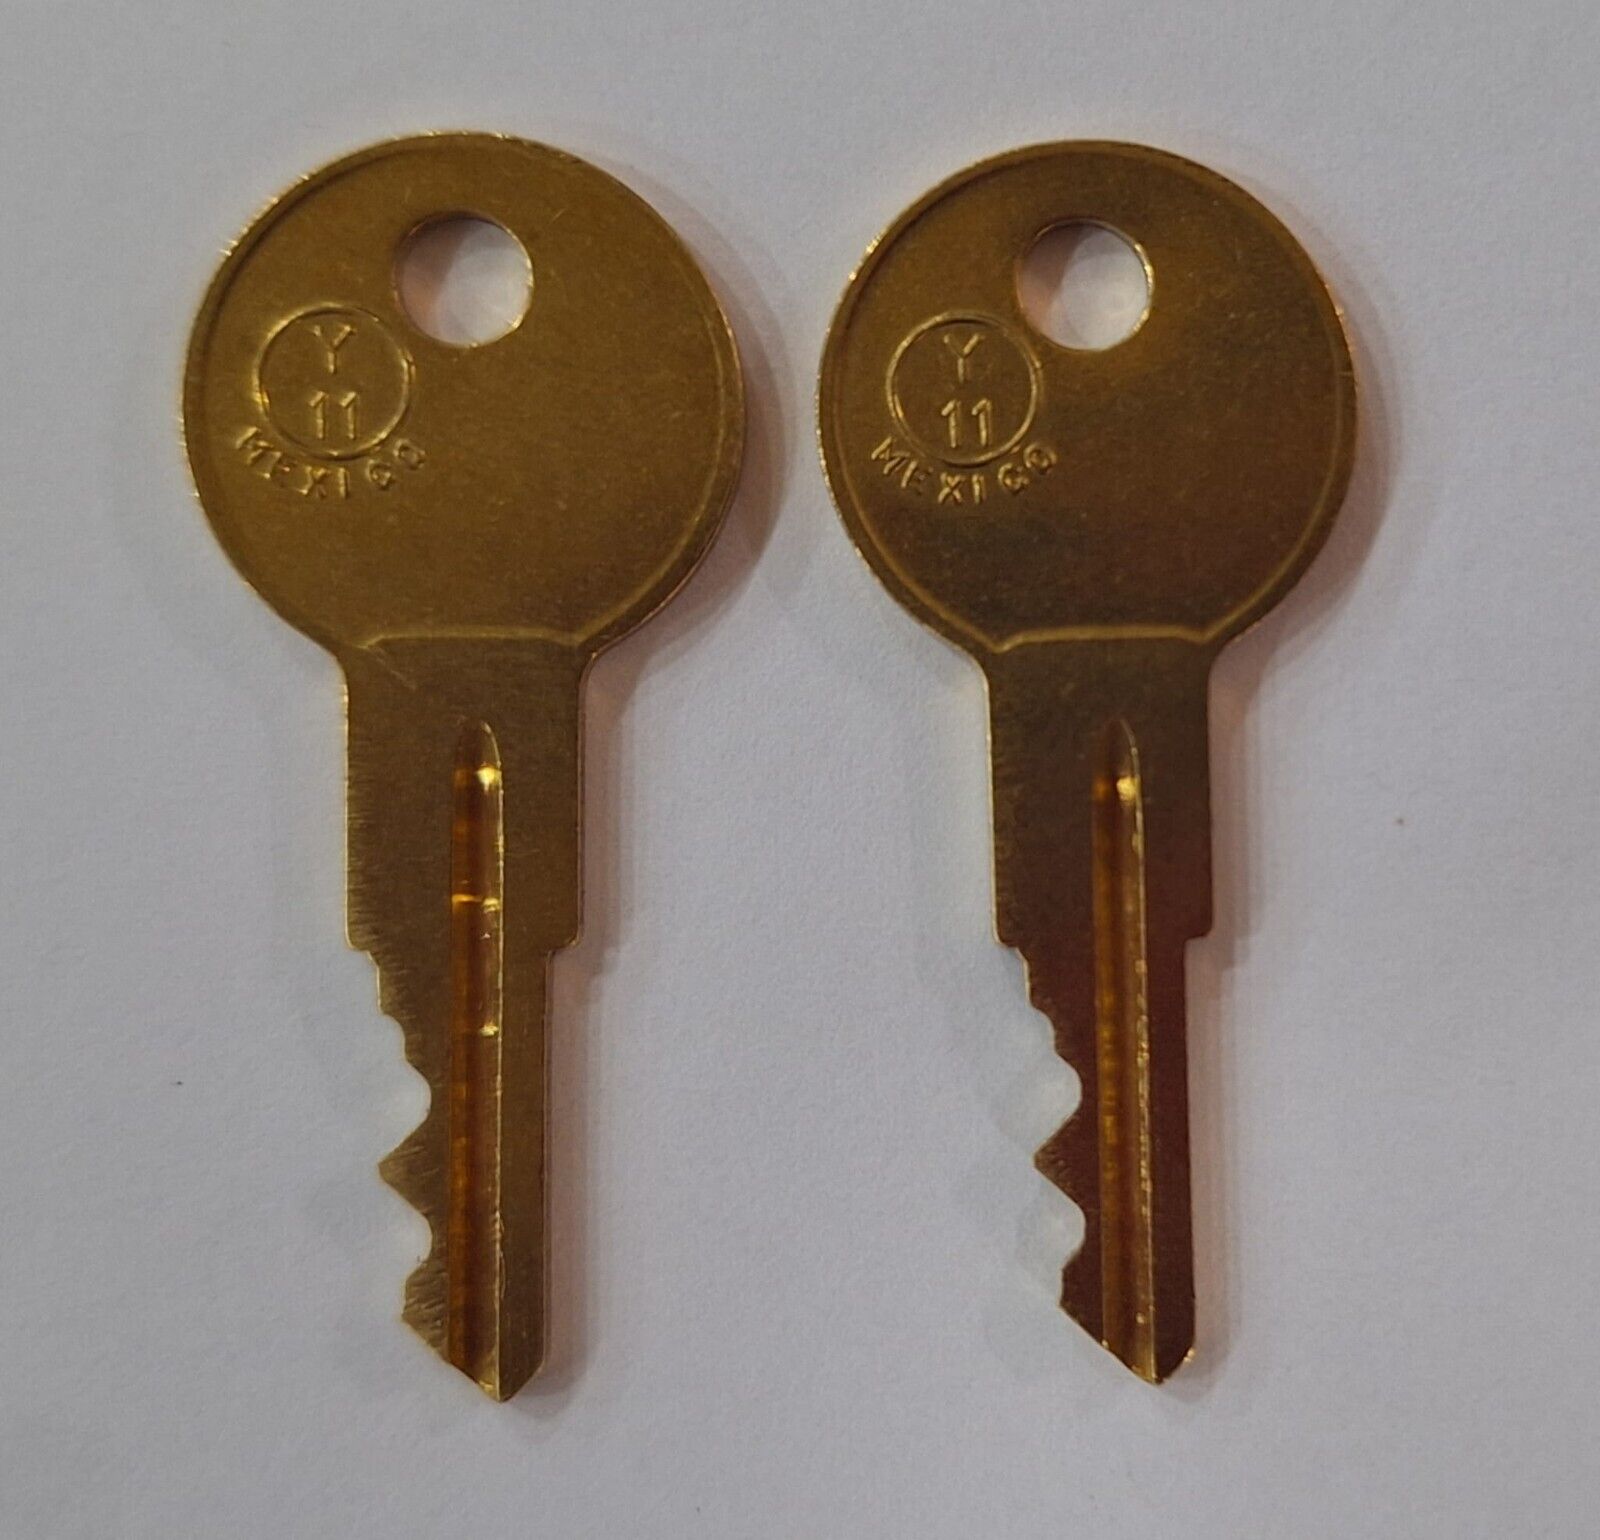 121E Two Keys for Hon / ESP File Cabinet, Desk, Office Furniture cut to key code